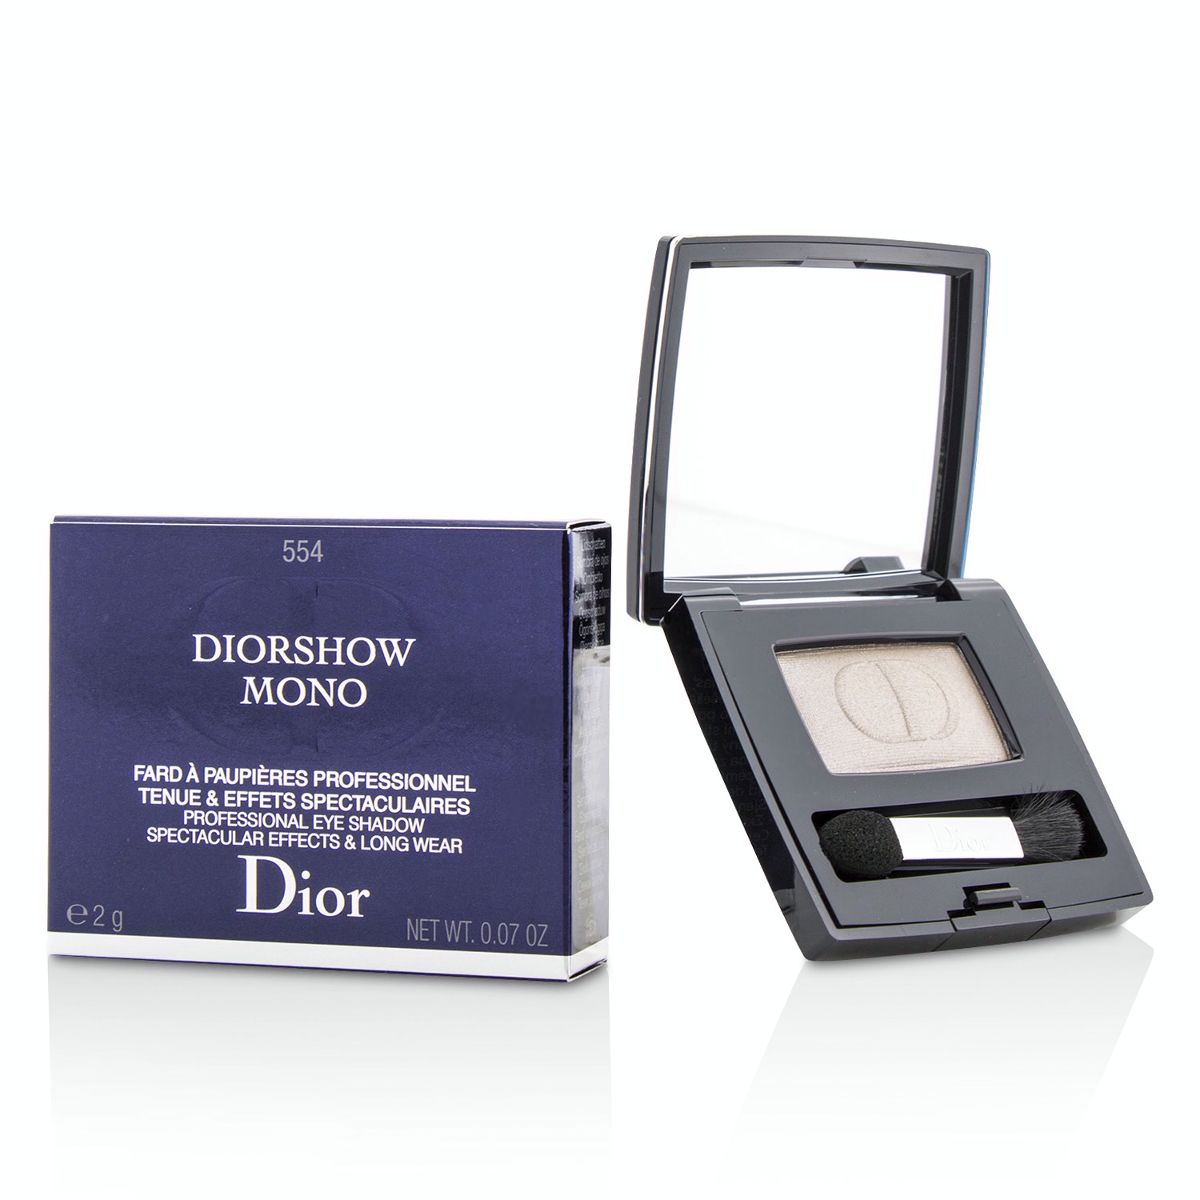 Diorshow Mono Professional Spectacular Effects  Long Wear Eyeshadow - # 554 Minimalism Christian Dior Image